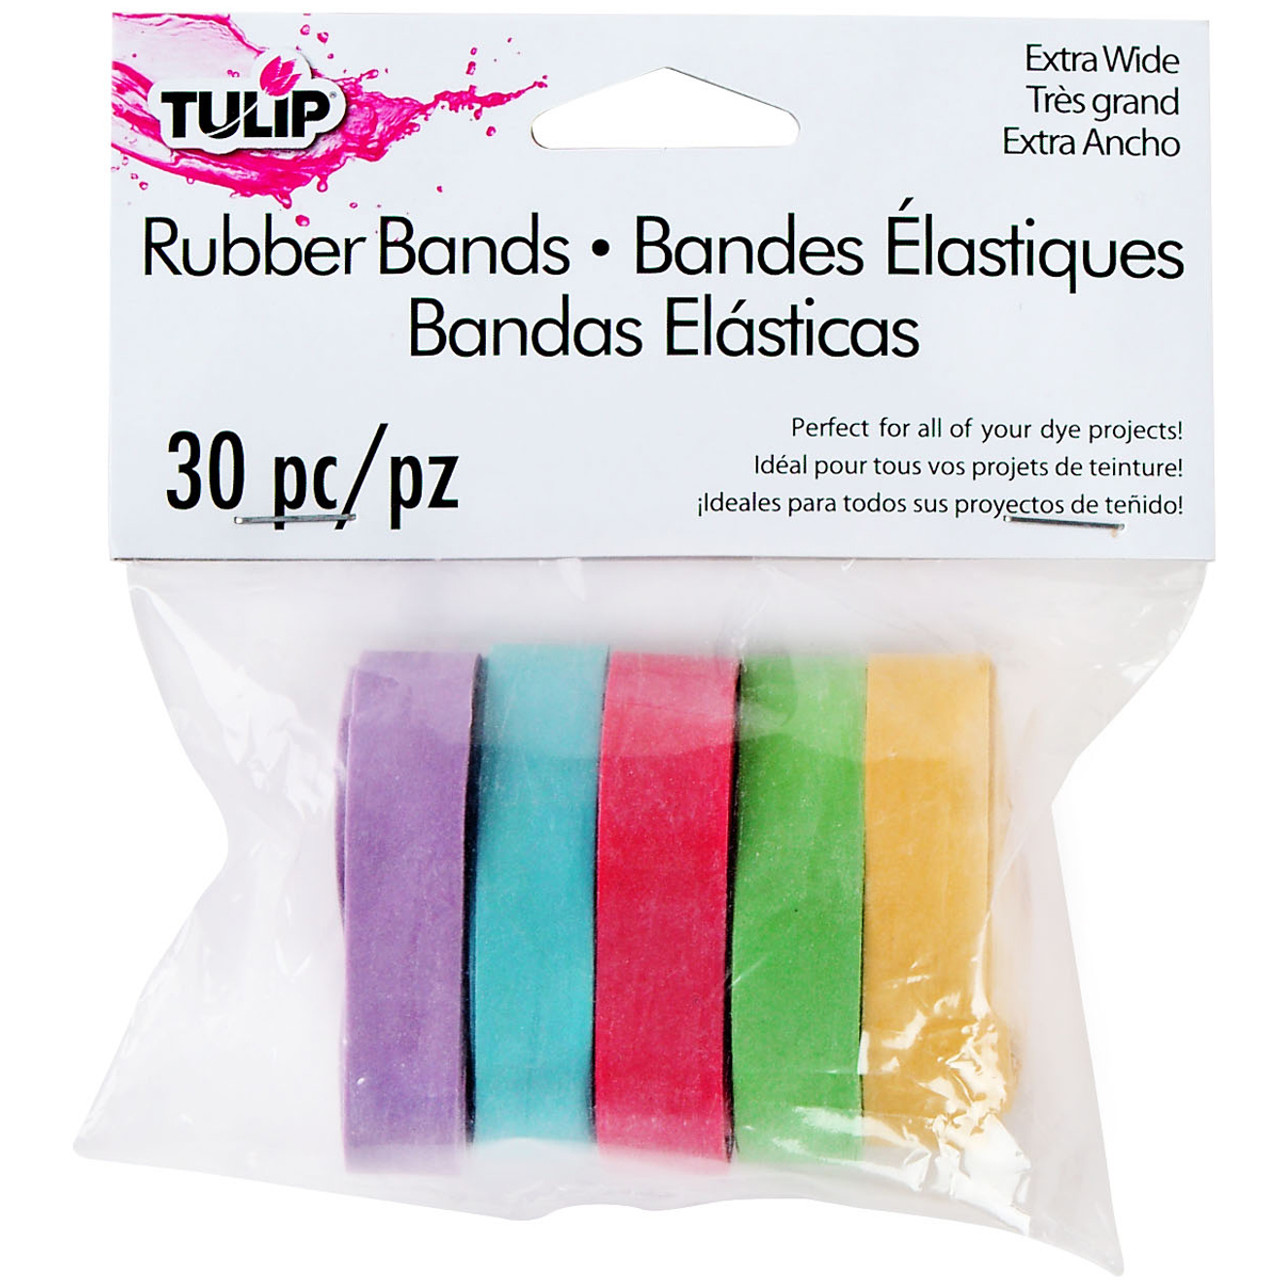 Tulip Rubber Bands 100/PKG